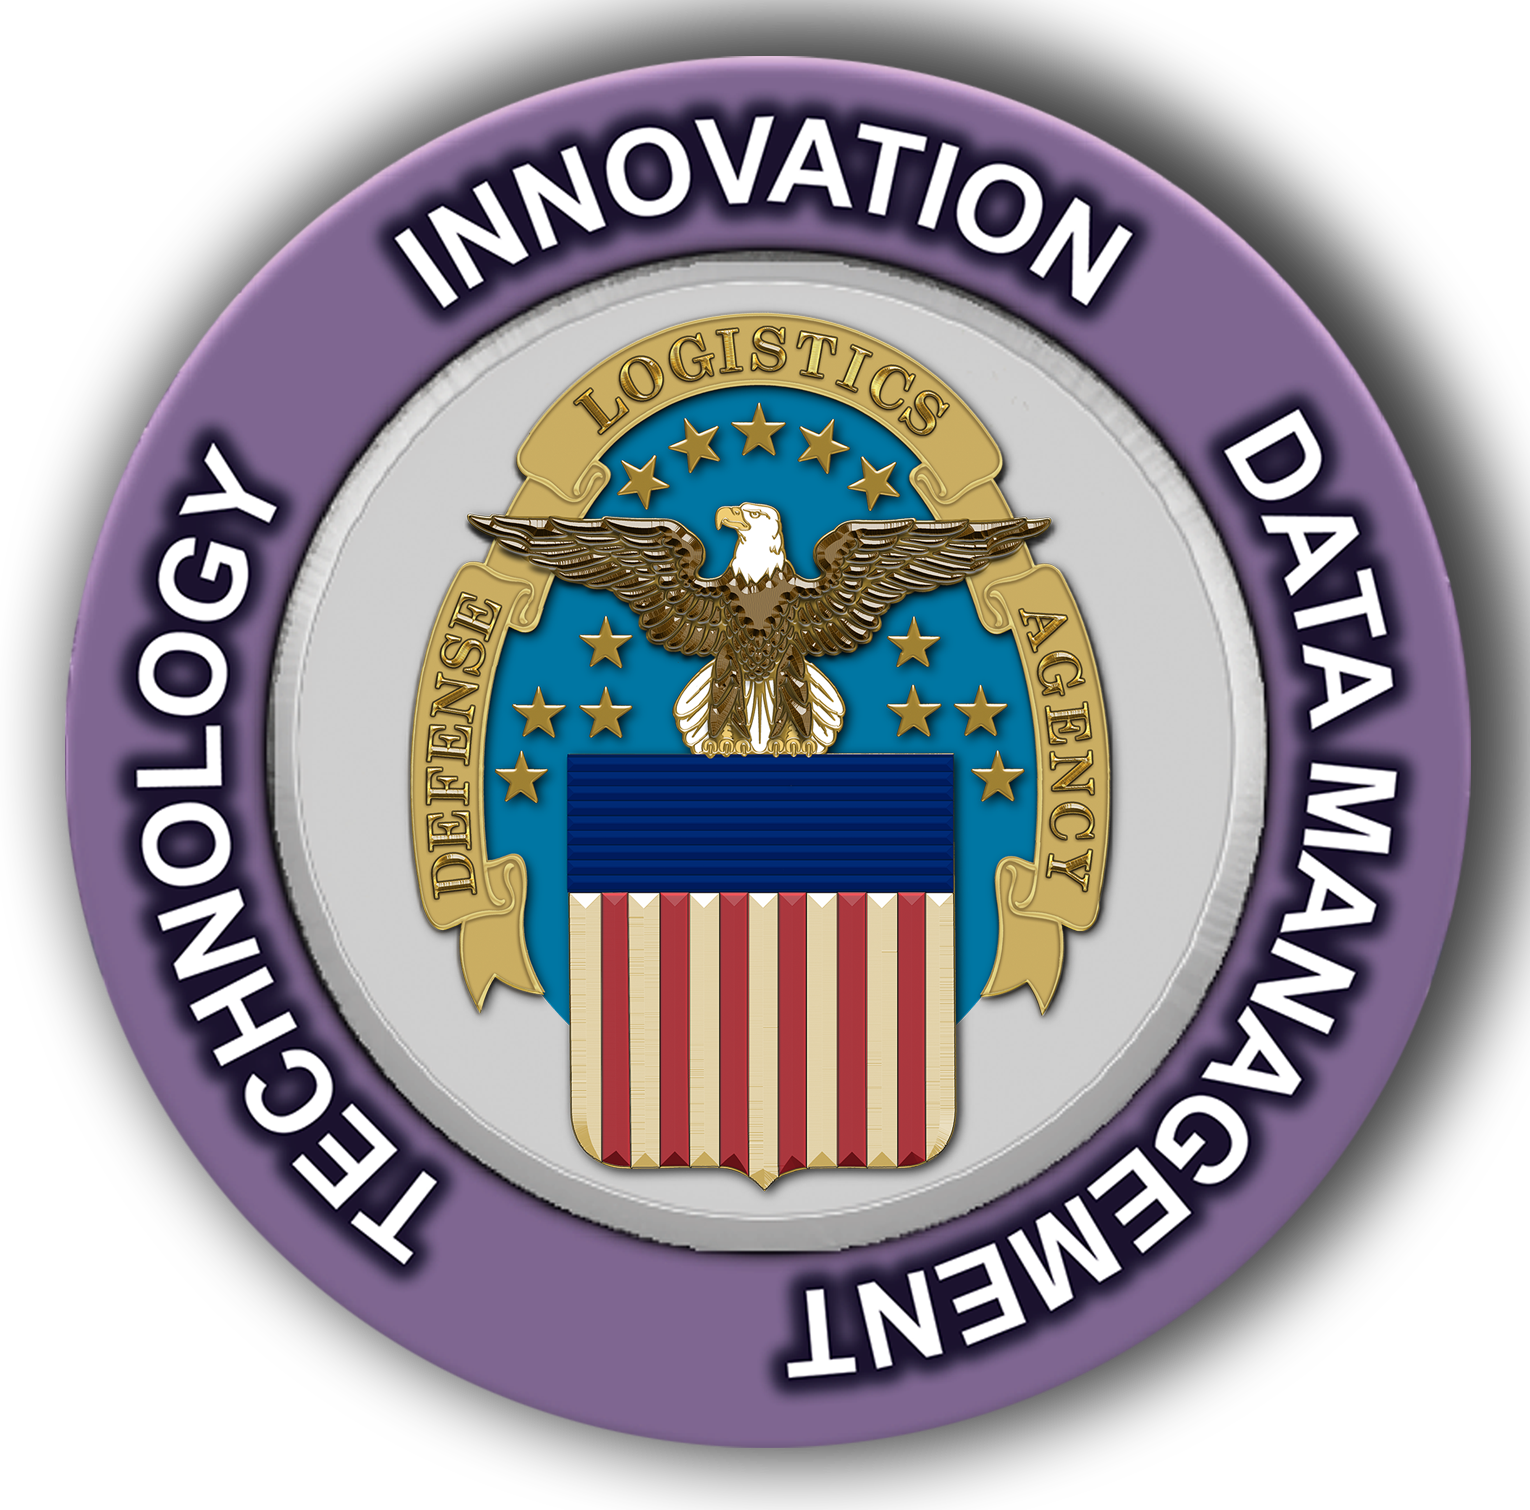 The emblem for the Enterprise Enablers Document